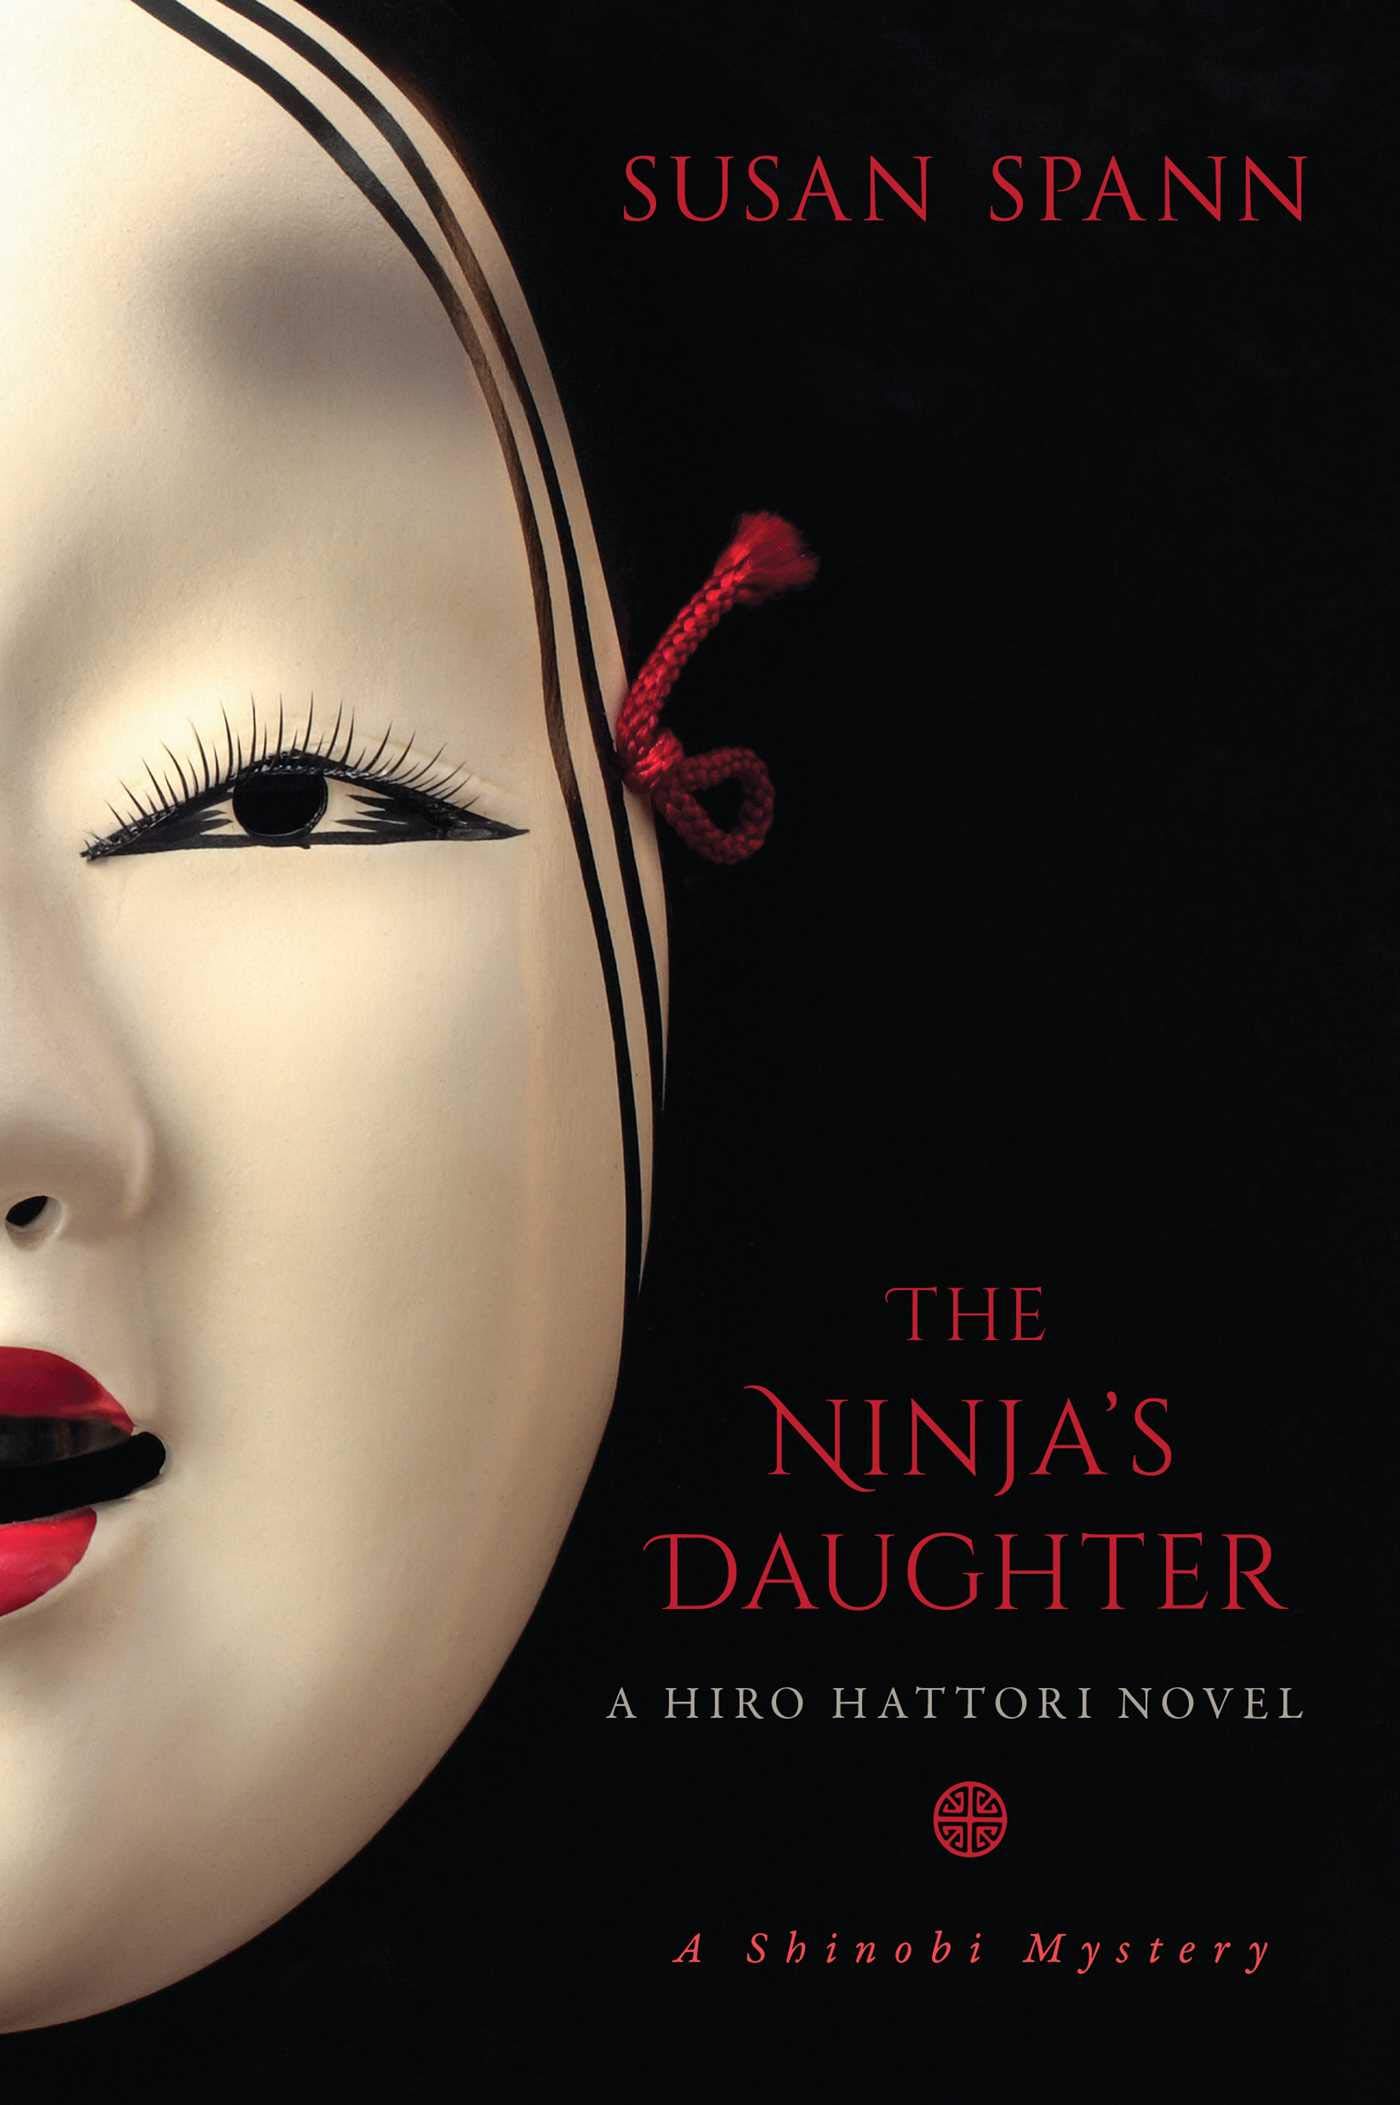 The Ninja's Daughter: A Hiro Hattori Novel